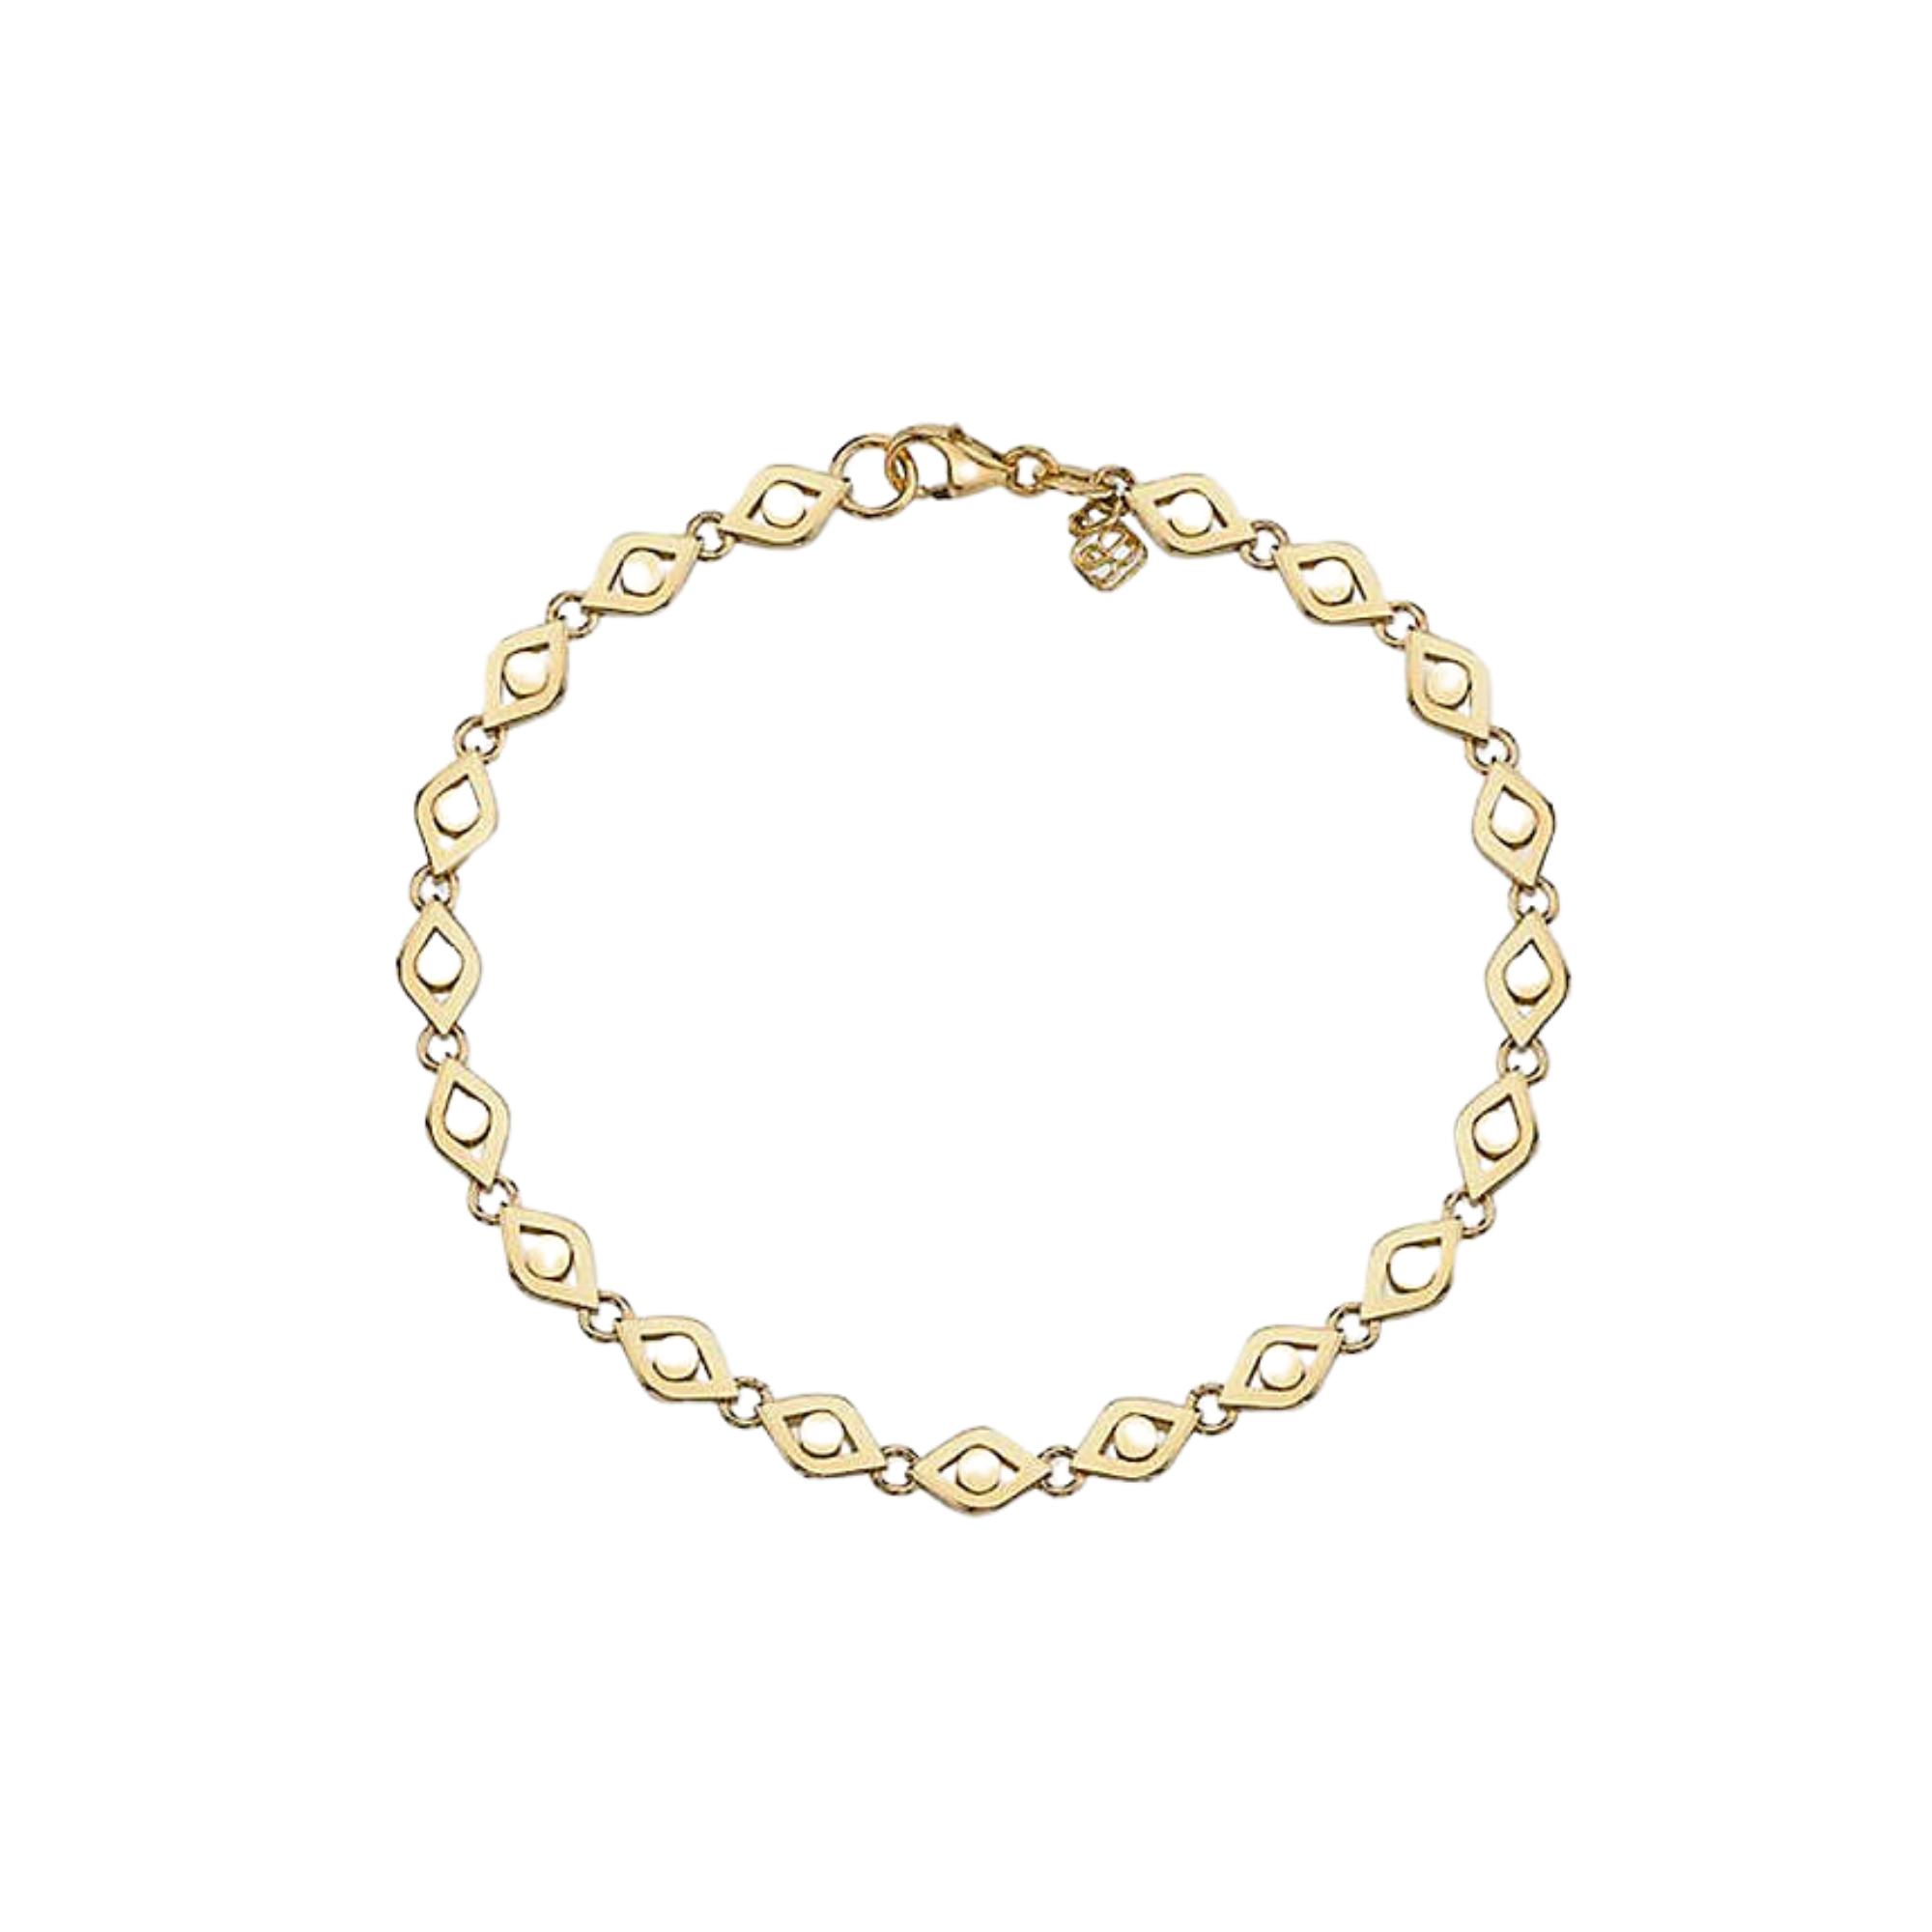 Sydney Evan Evil Eye Gold Charm Bracelet, $2,175